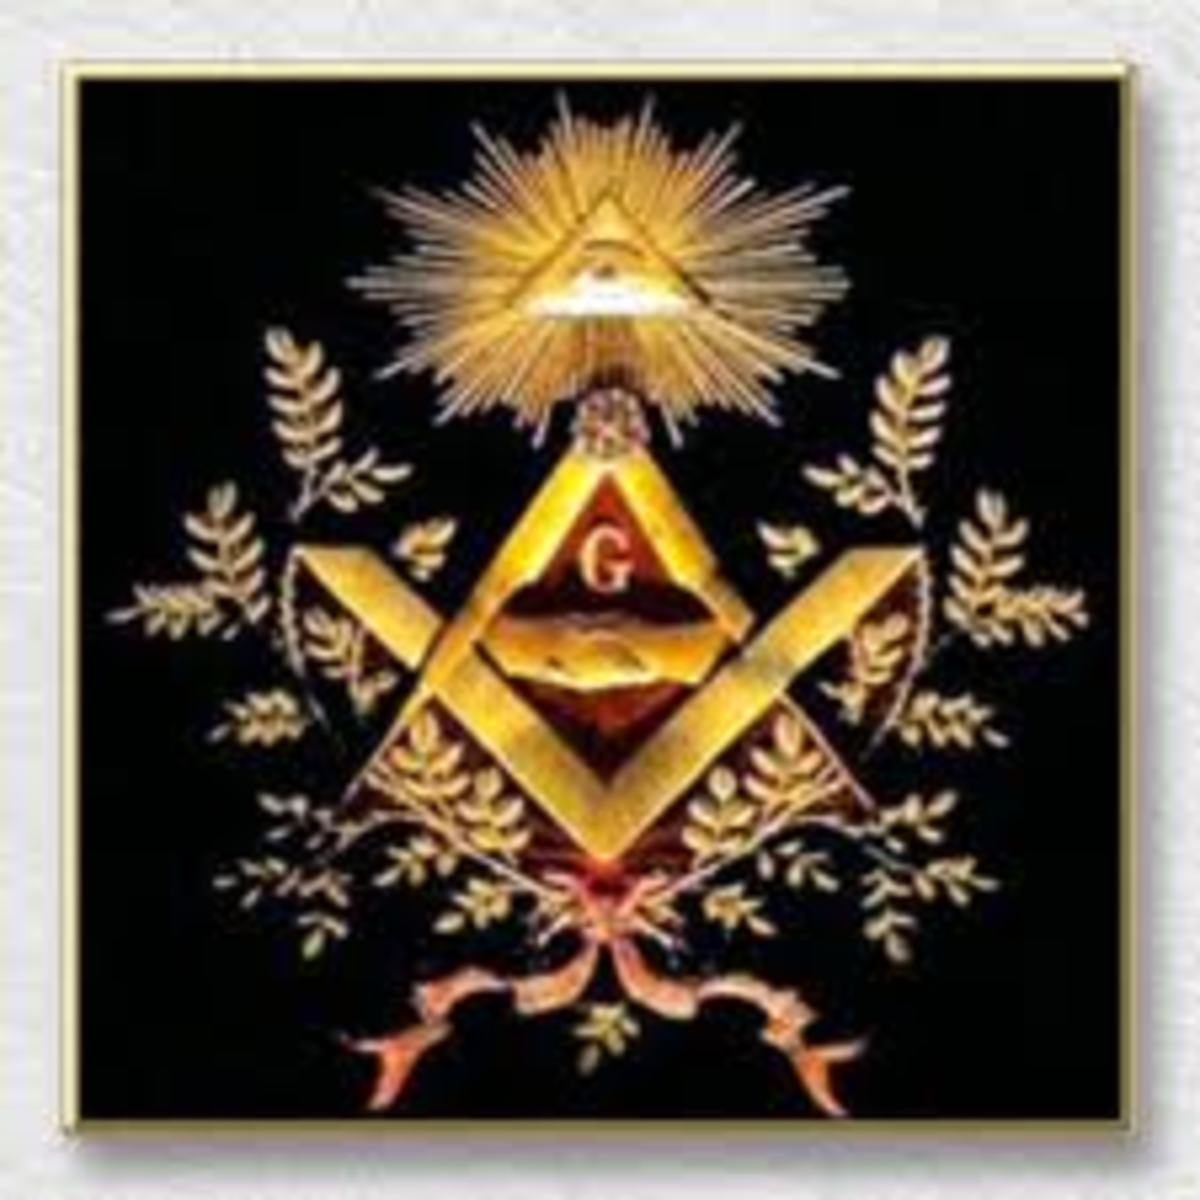 jay-z-admits-he-is-a-freemason